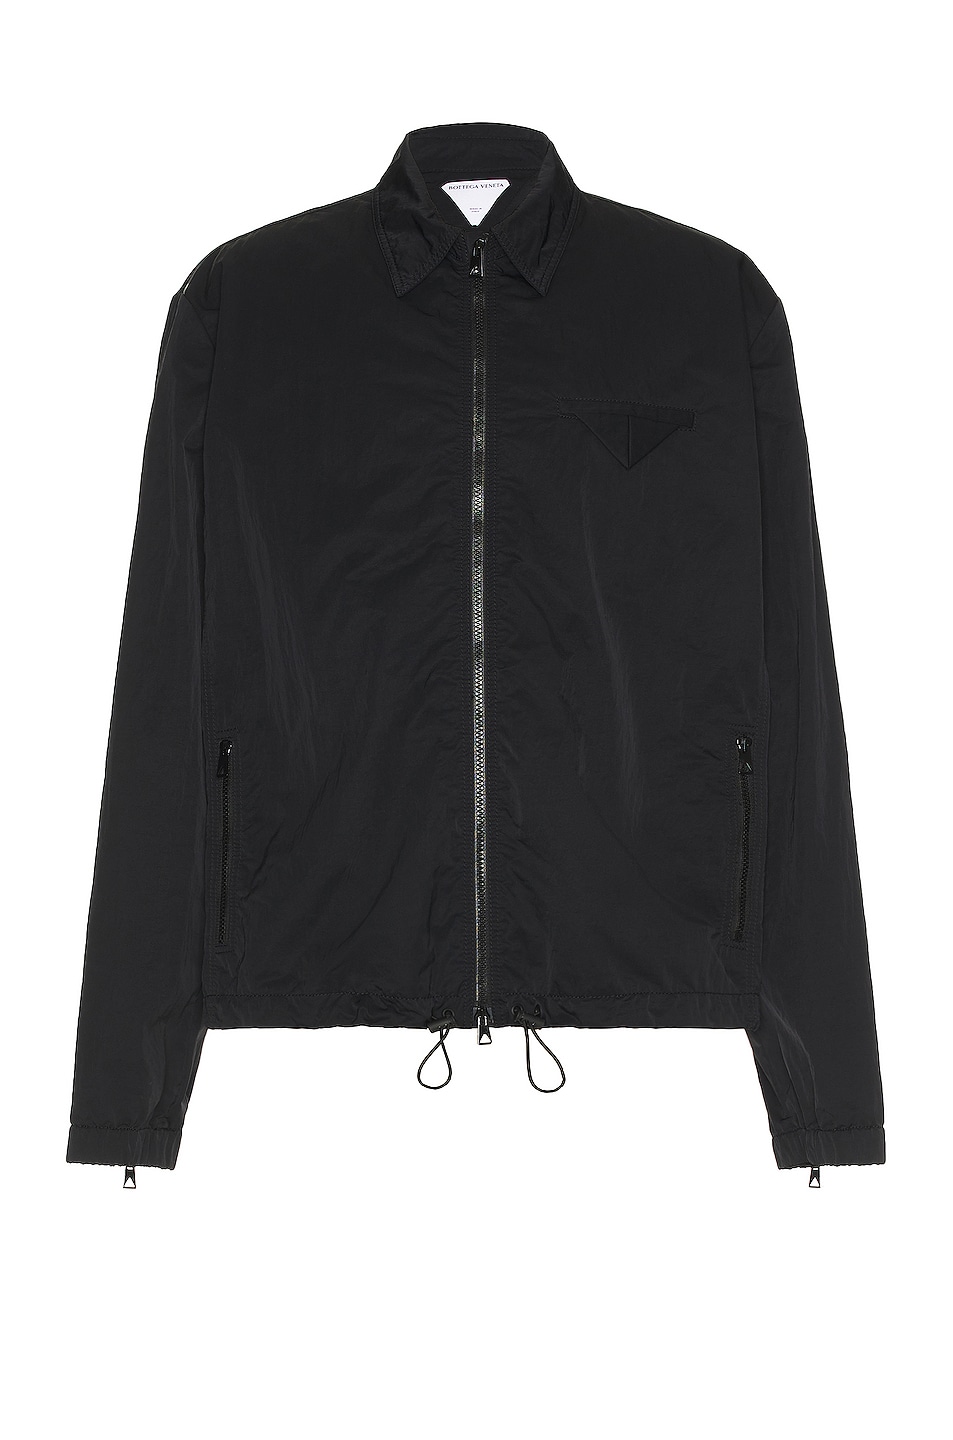 Bottega Veneta Tech Nylon Triangle Pocket Jacket in Black | FWRD